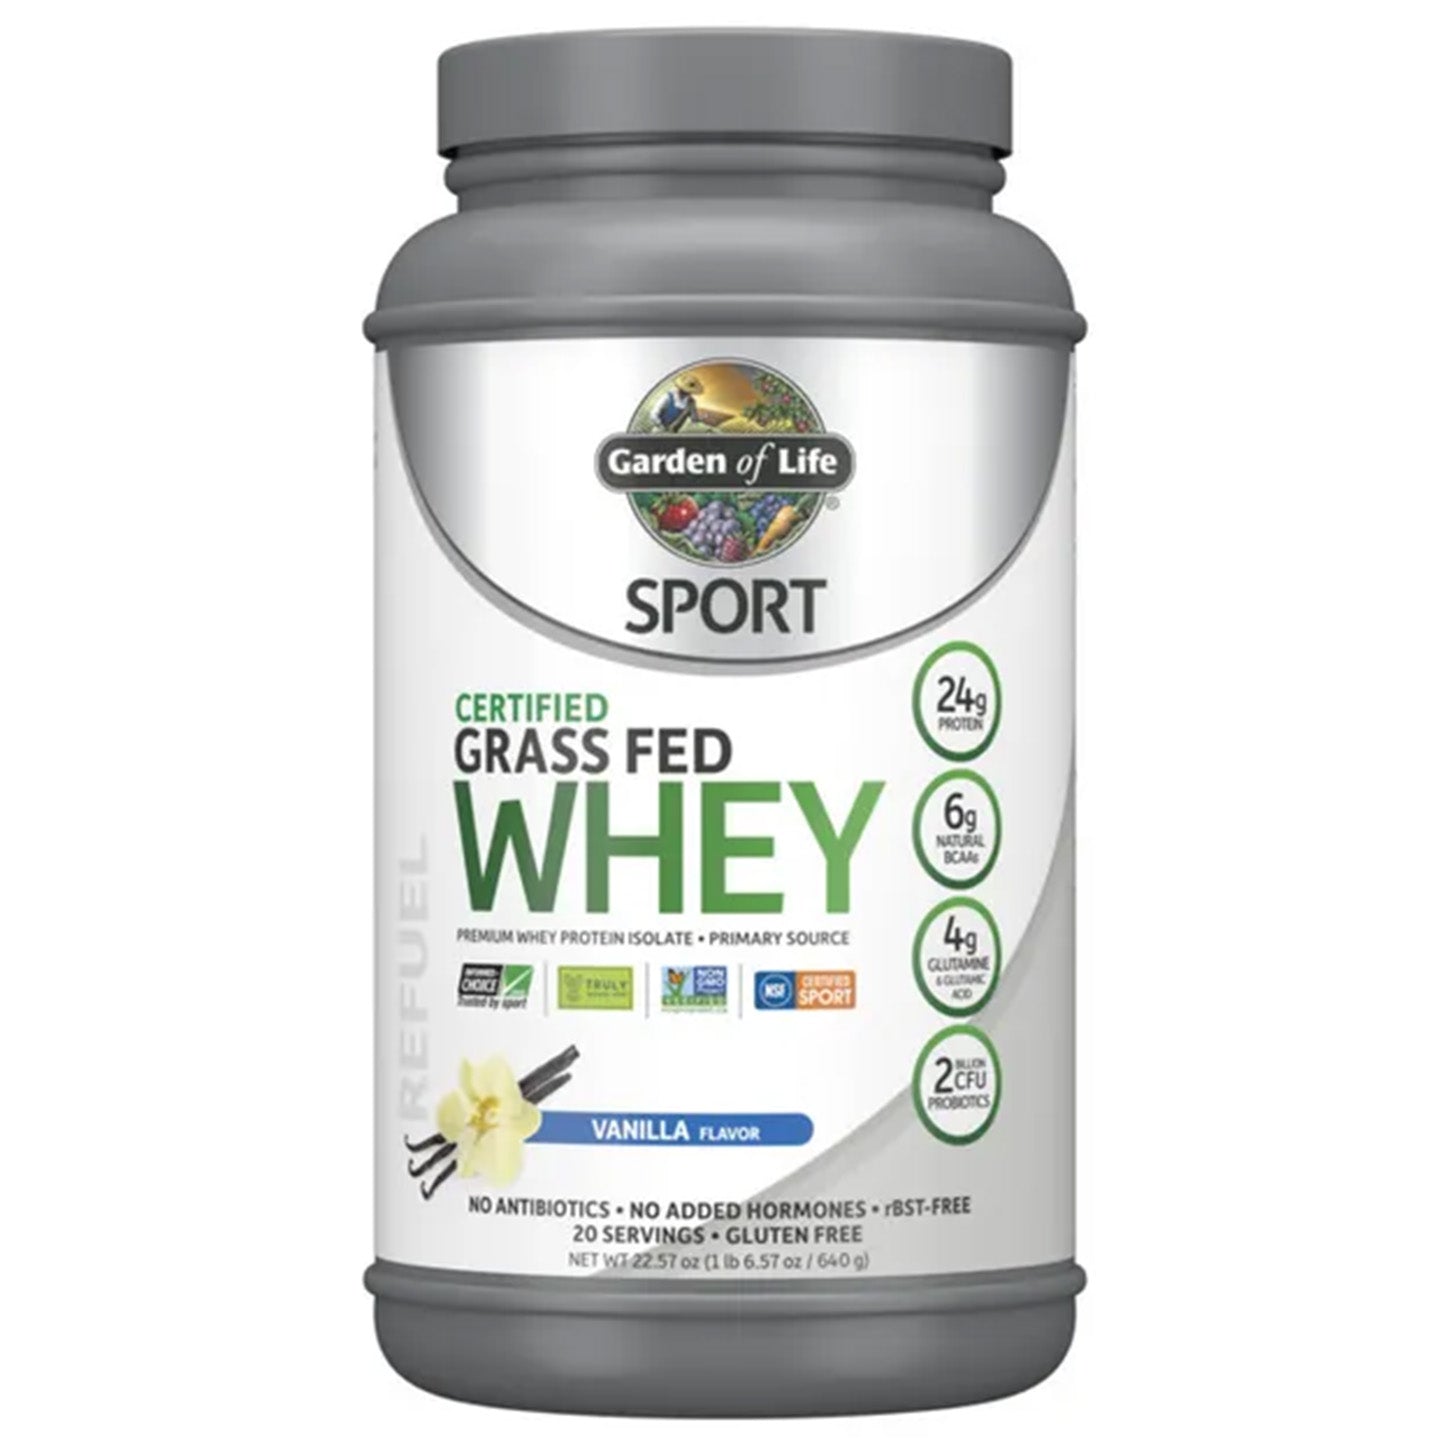 Garden of Life SPORT Certified Grass Fed Whey Powder: Proteína de Suero de Pastoreo para tu Rendimiento | ProHealth Shop [Panamá]